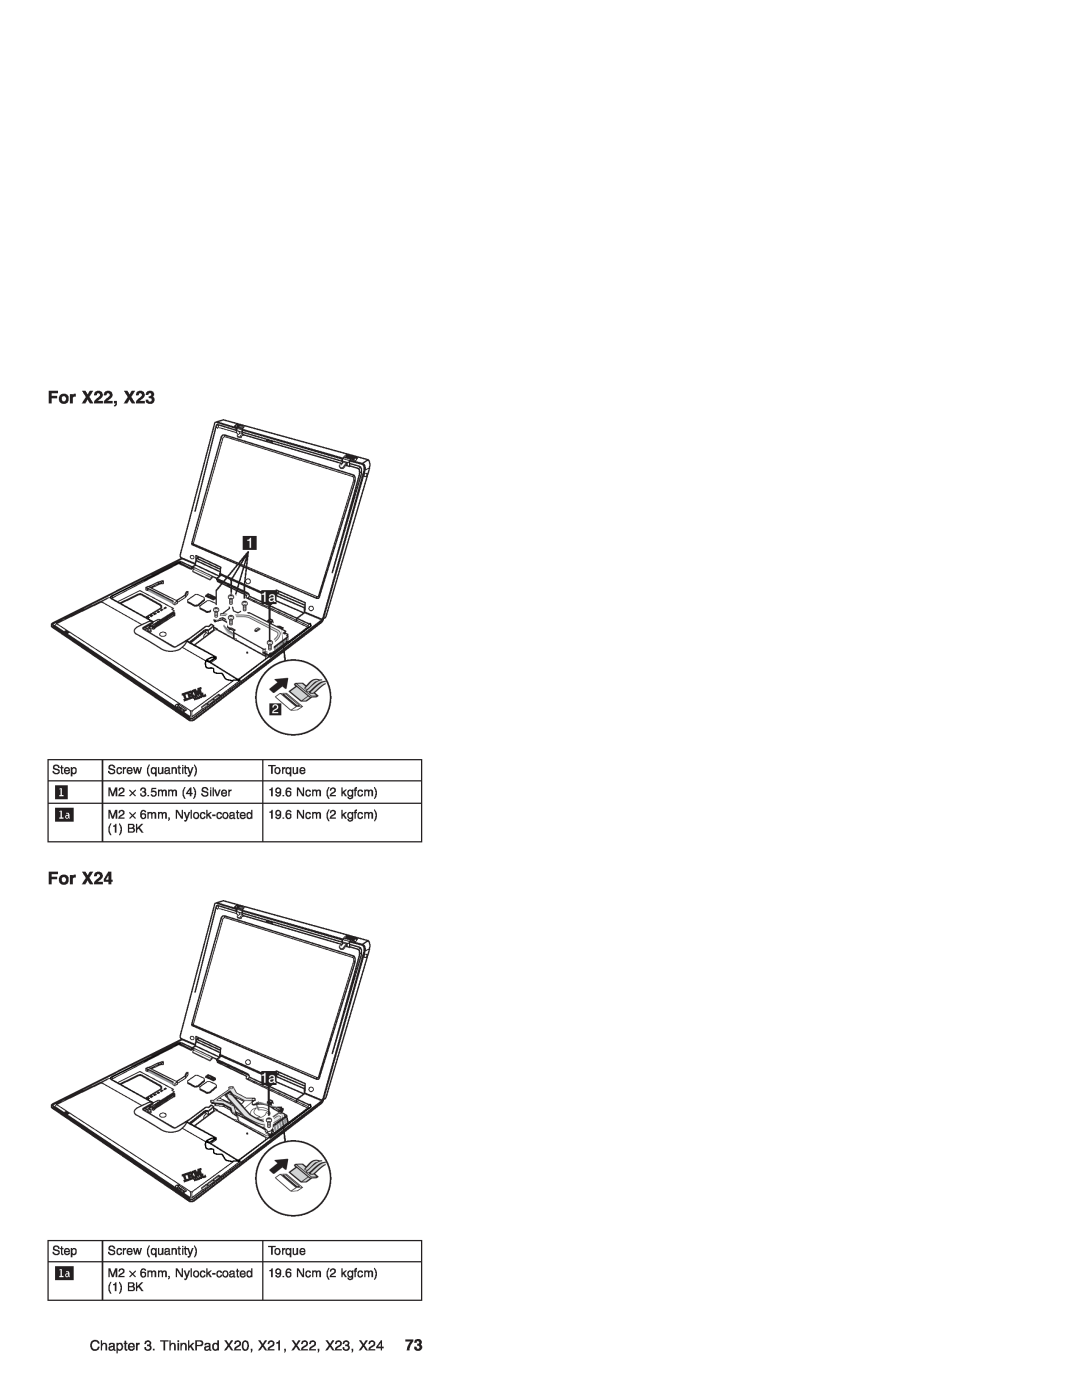 IBM manual For X22, ThinkPad X20, X21, X22, X23, X24 